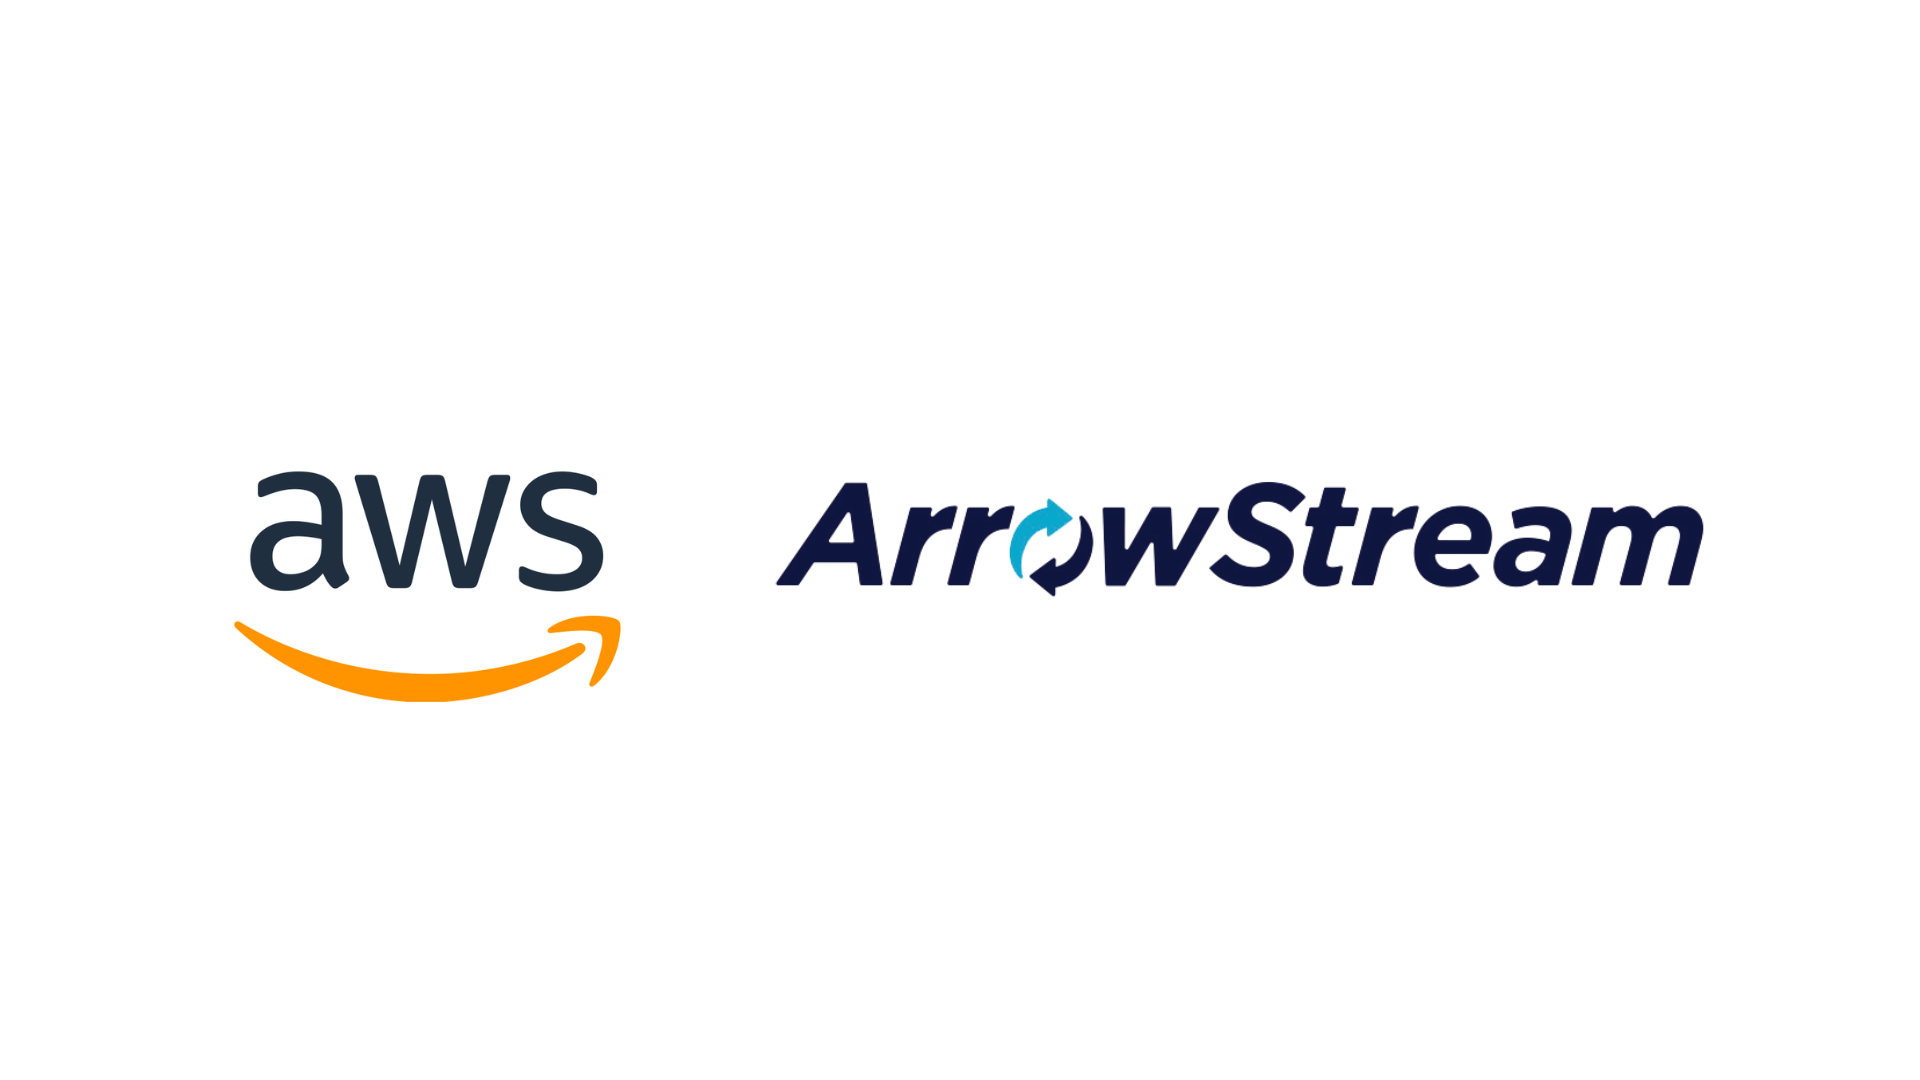 arrowstream x aws - press release graphic (1)